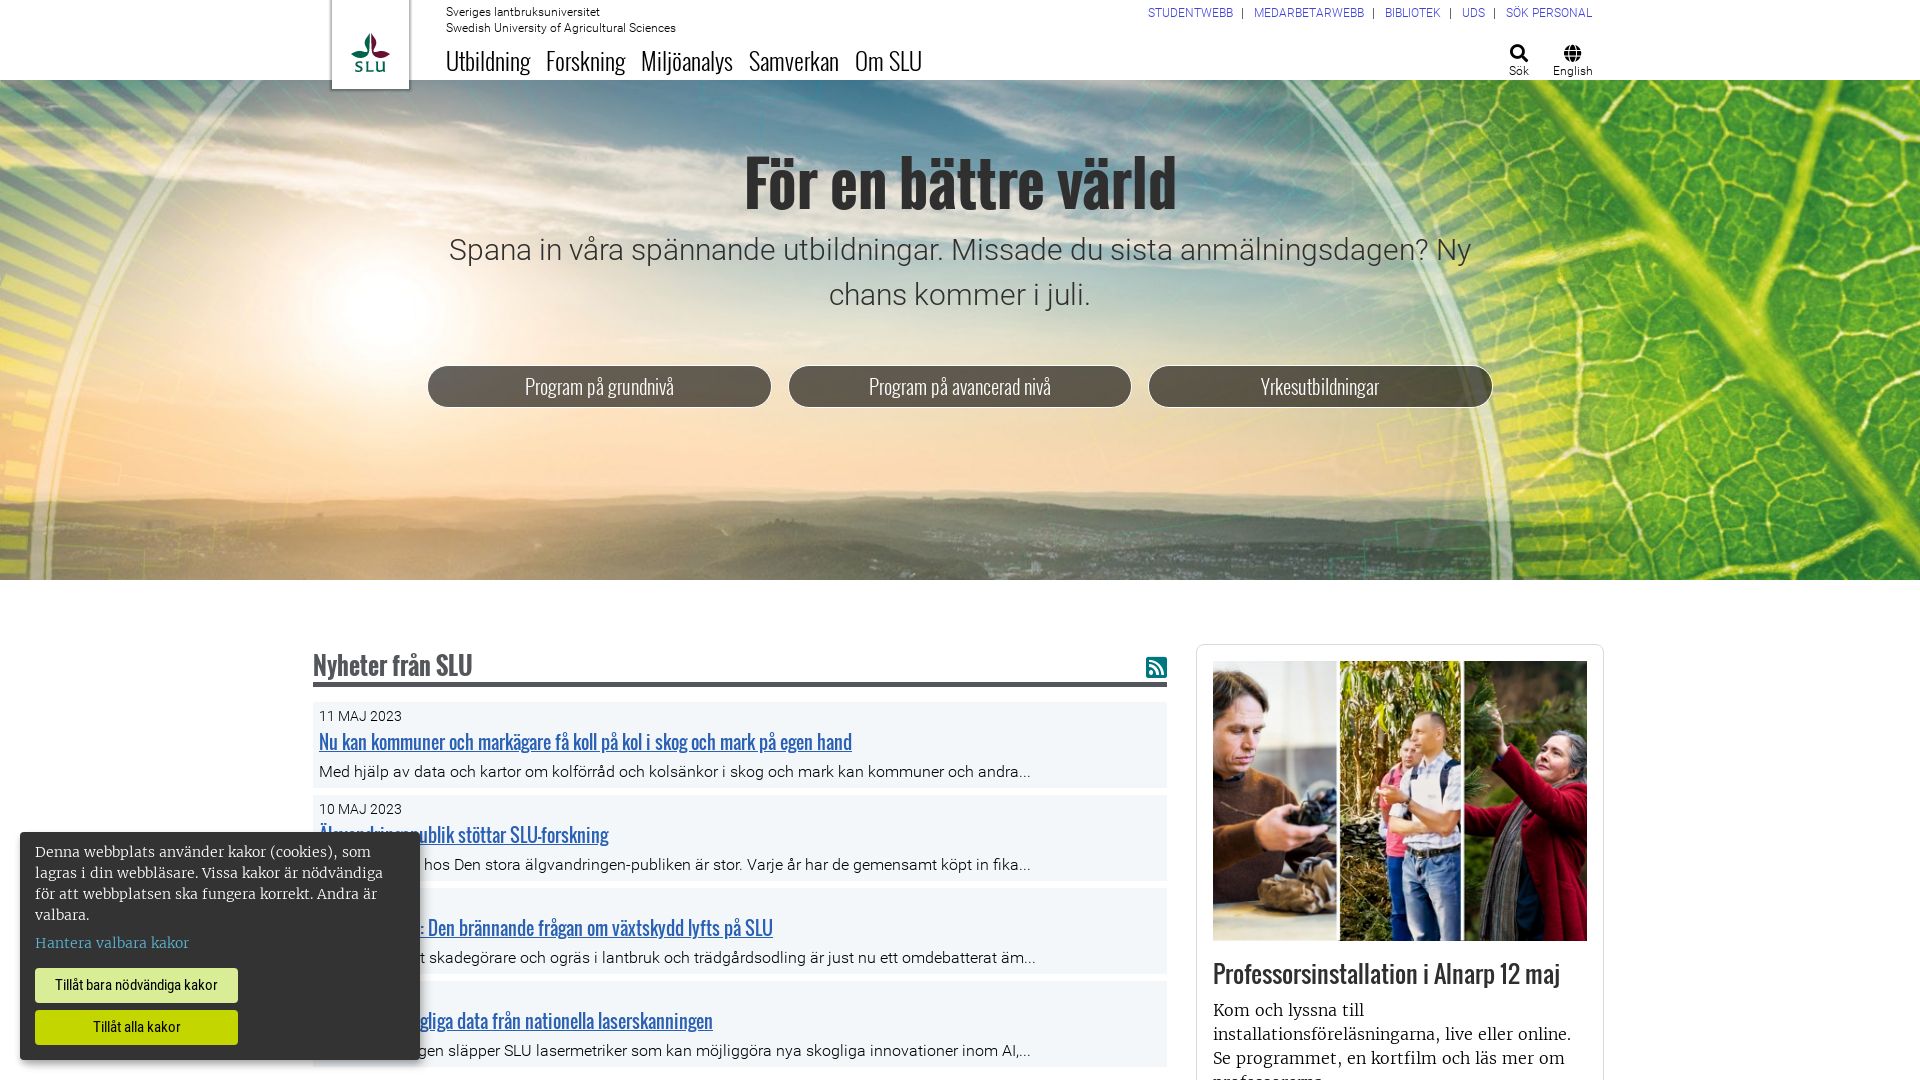 Website status slu.se is   ONLINE